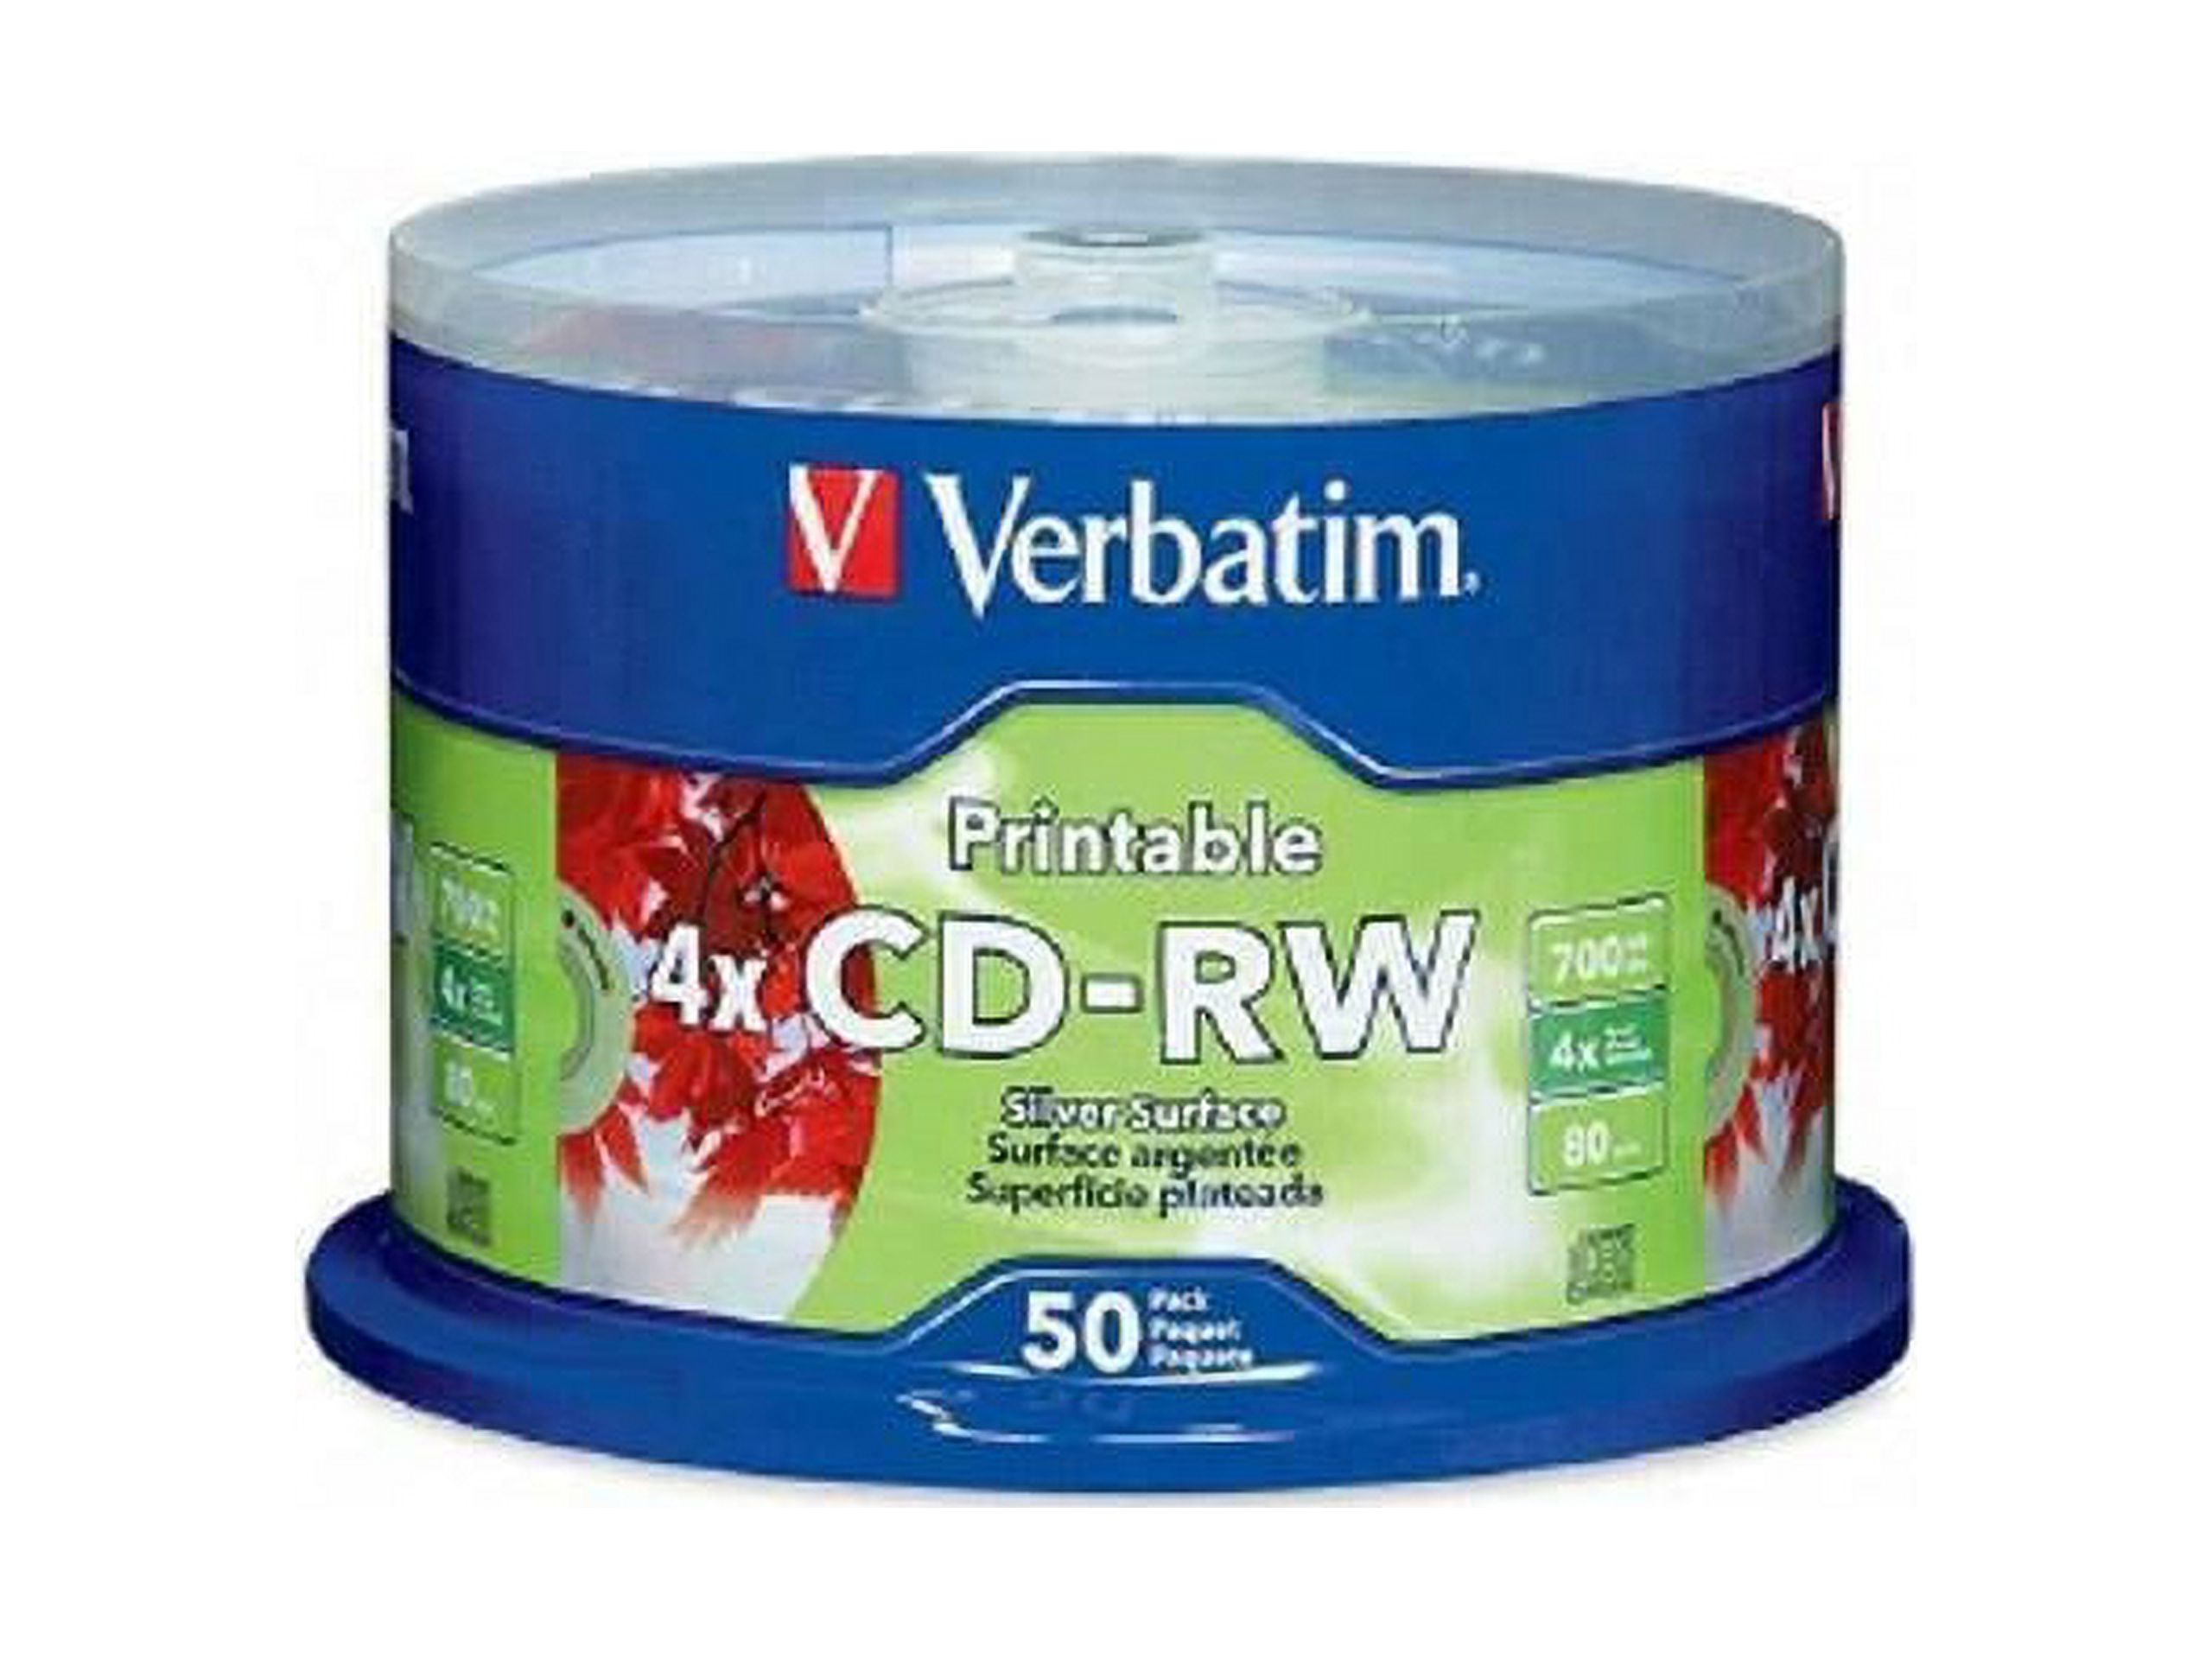 Verbatim DataLifePlus 700MB 2X - 4X CD-RW 50 Packs Spindle Media Model 95159 - image 1 of 4